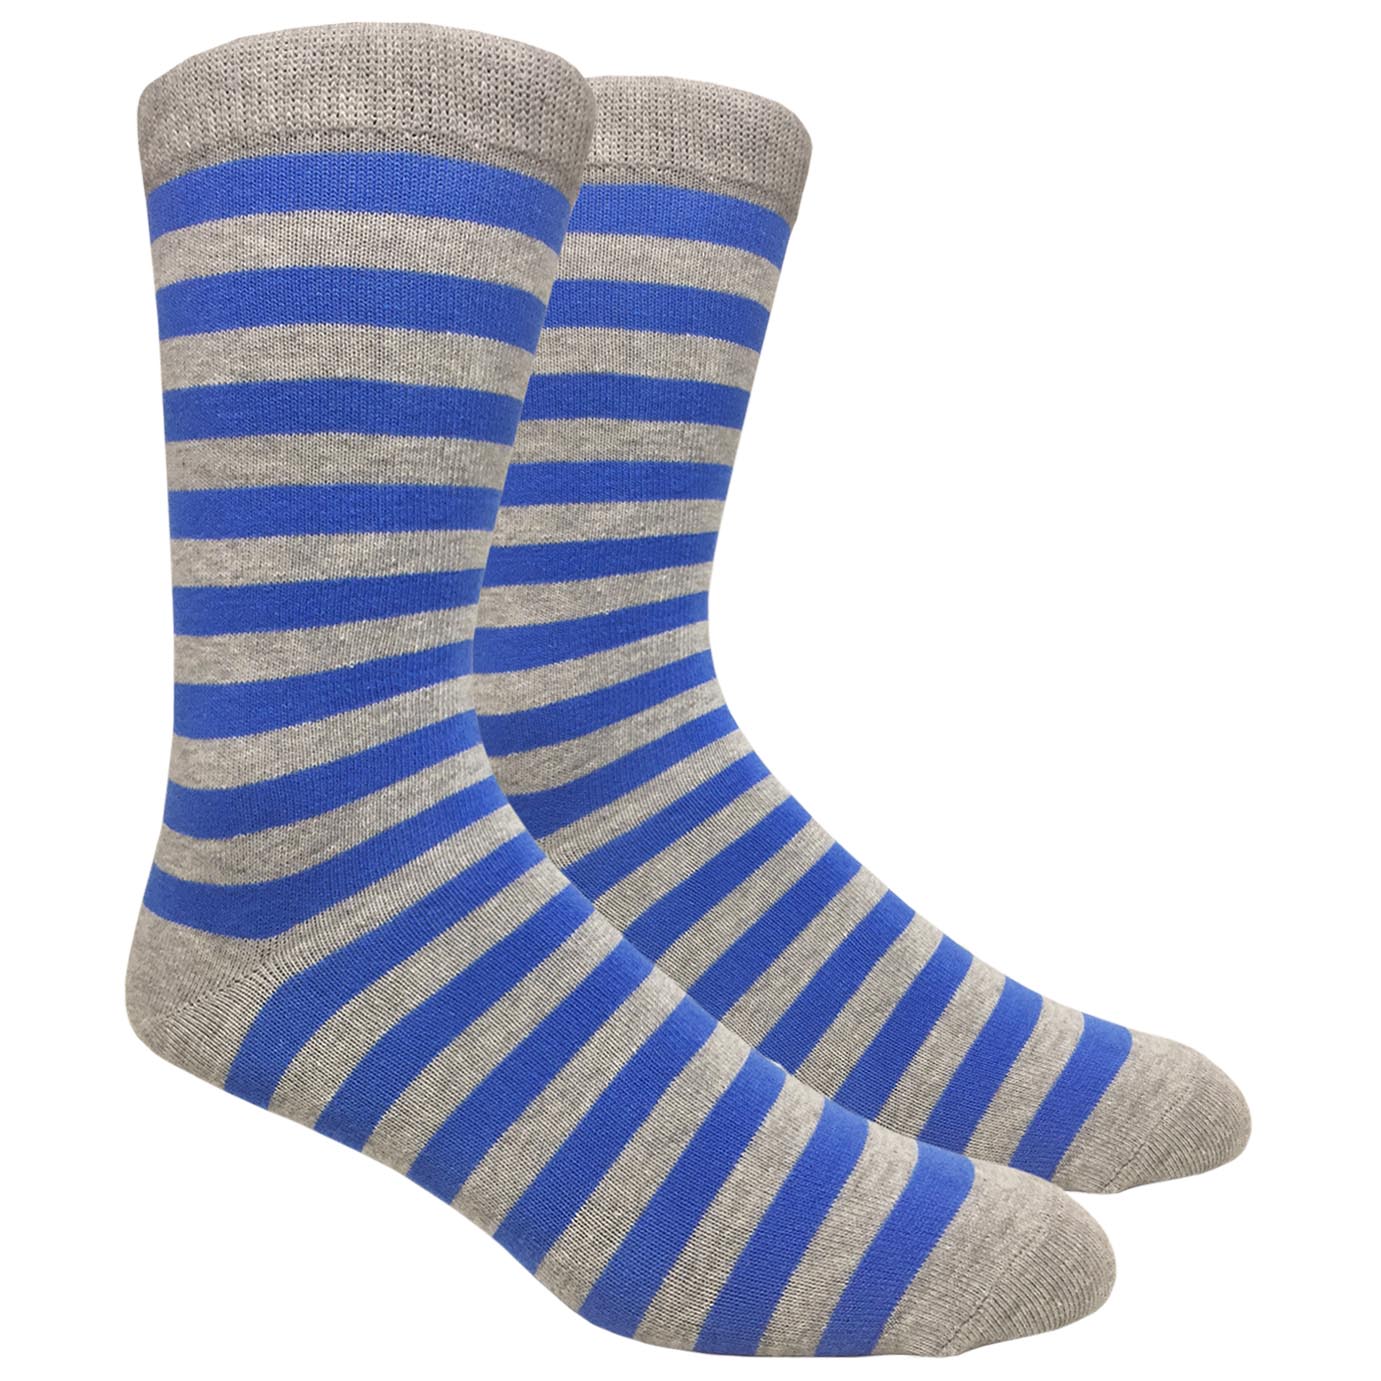 FineFit Black Label Stripe Socks - Grey & Blue